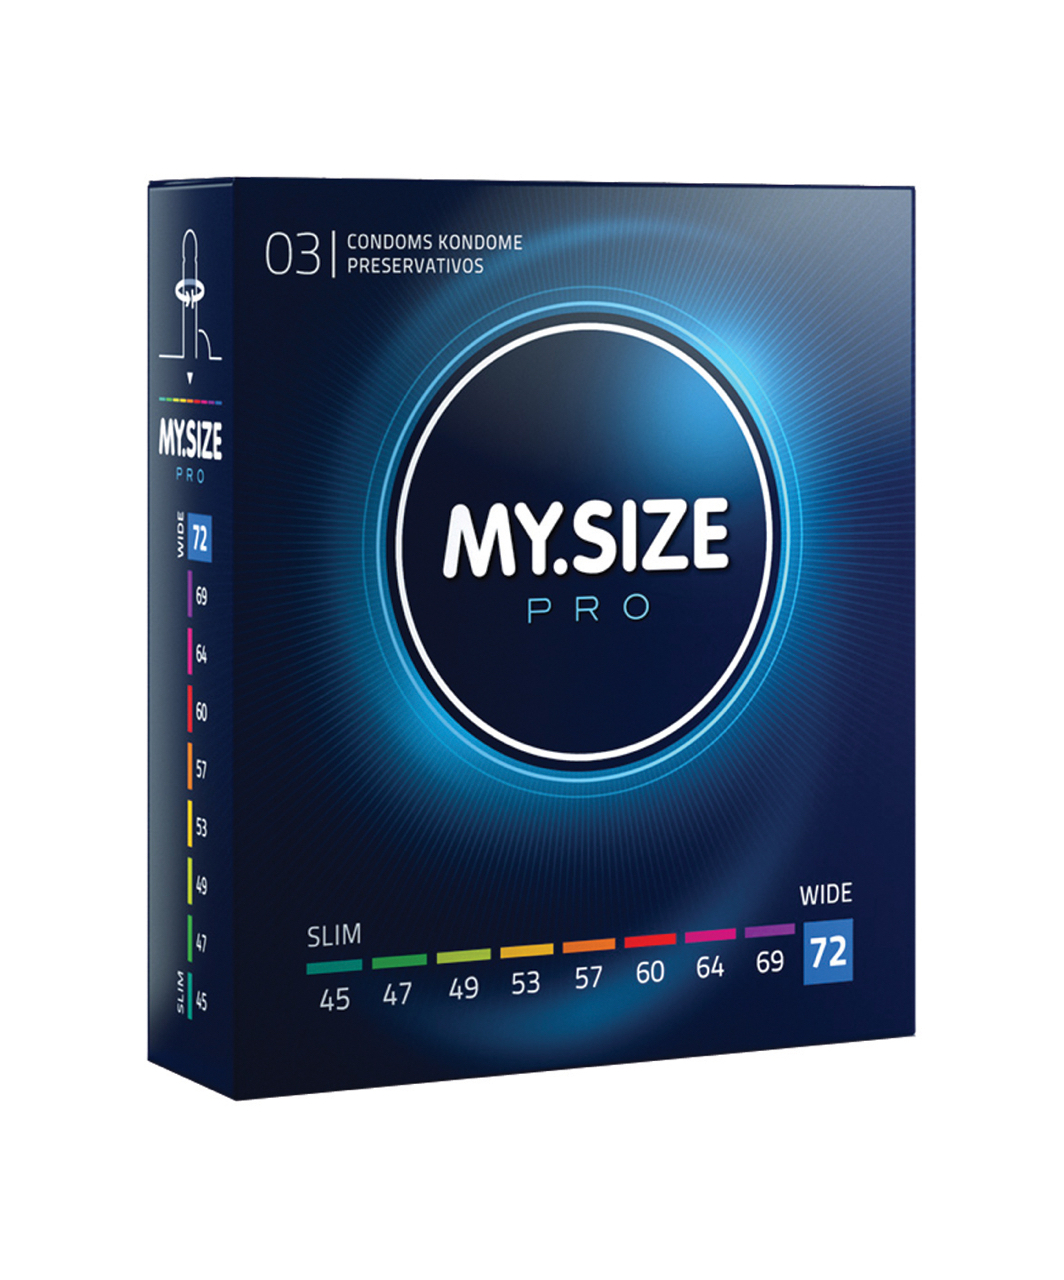 MY.SIZE pro презервативы (3 шт.)